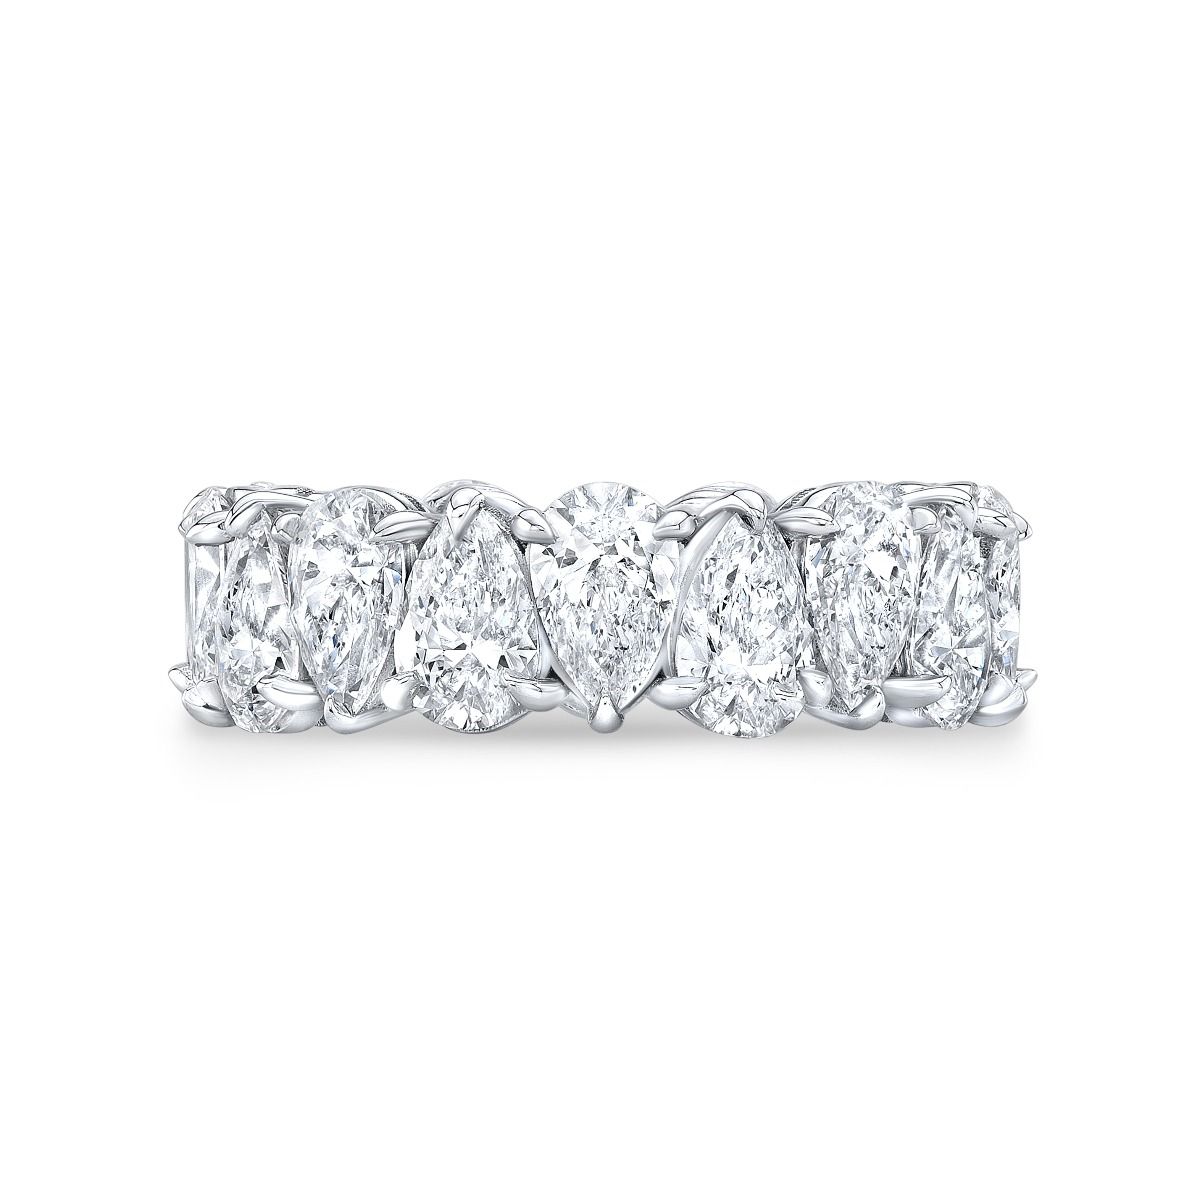 5 Carat Alternating Pear Cut Diamond Eternity Ring